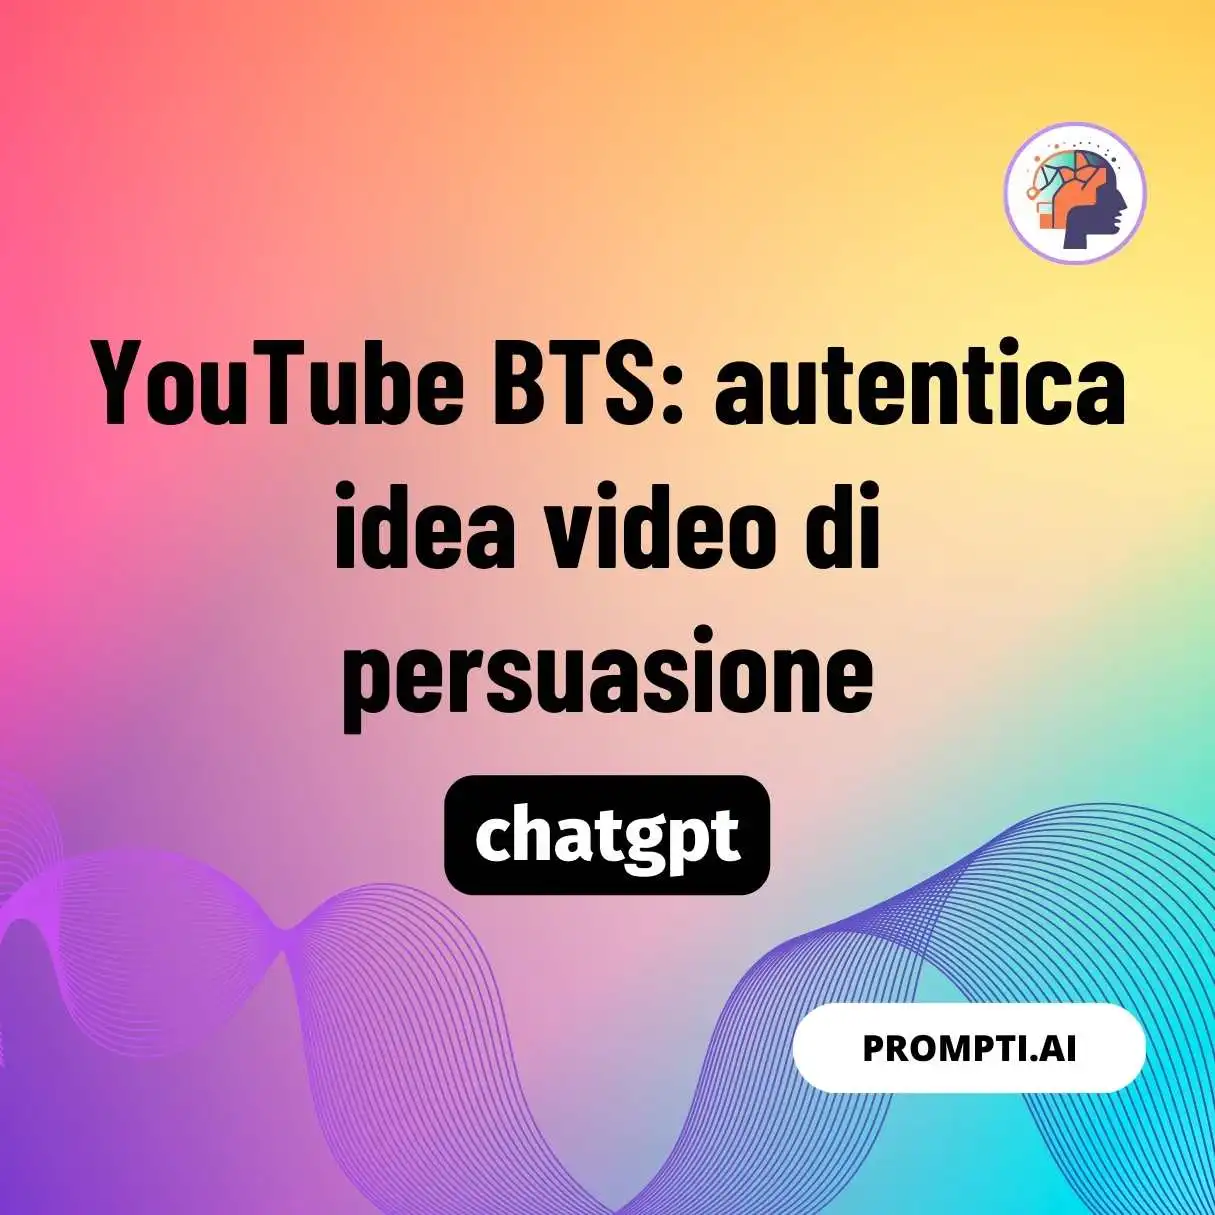 YouTube BTS: autentica idea video di persuasione